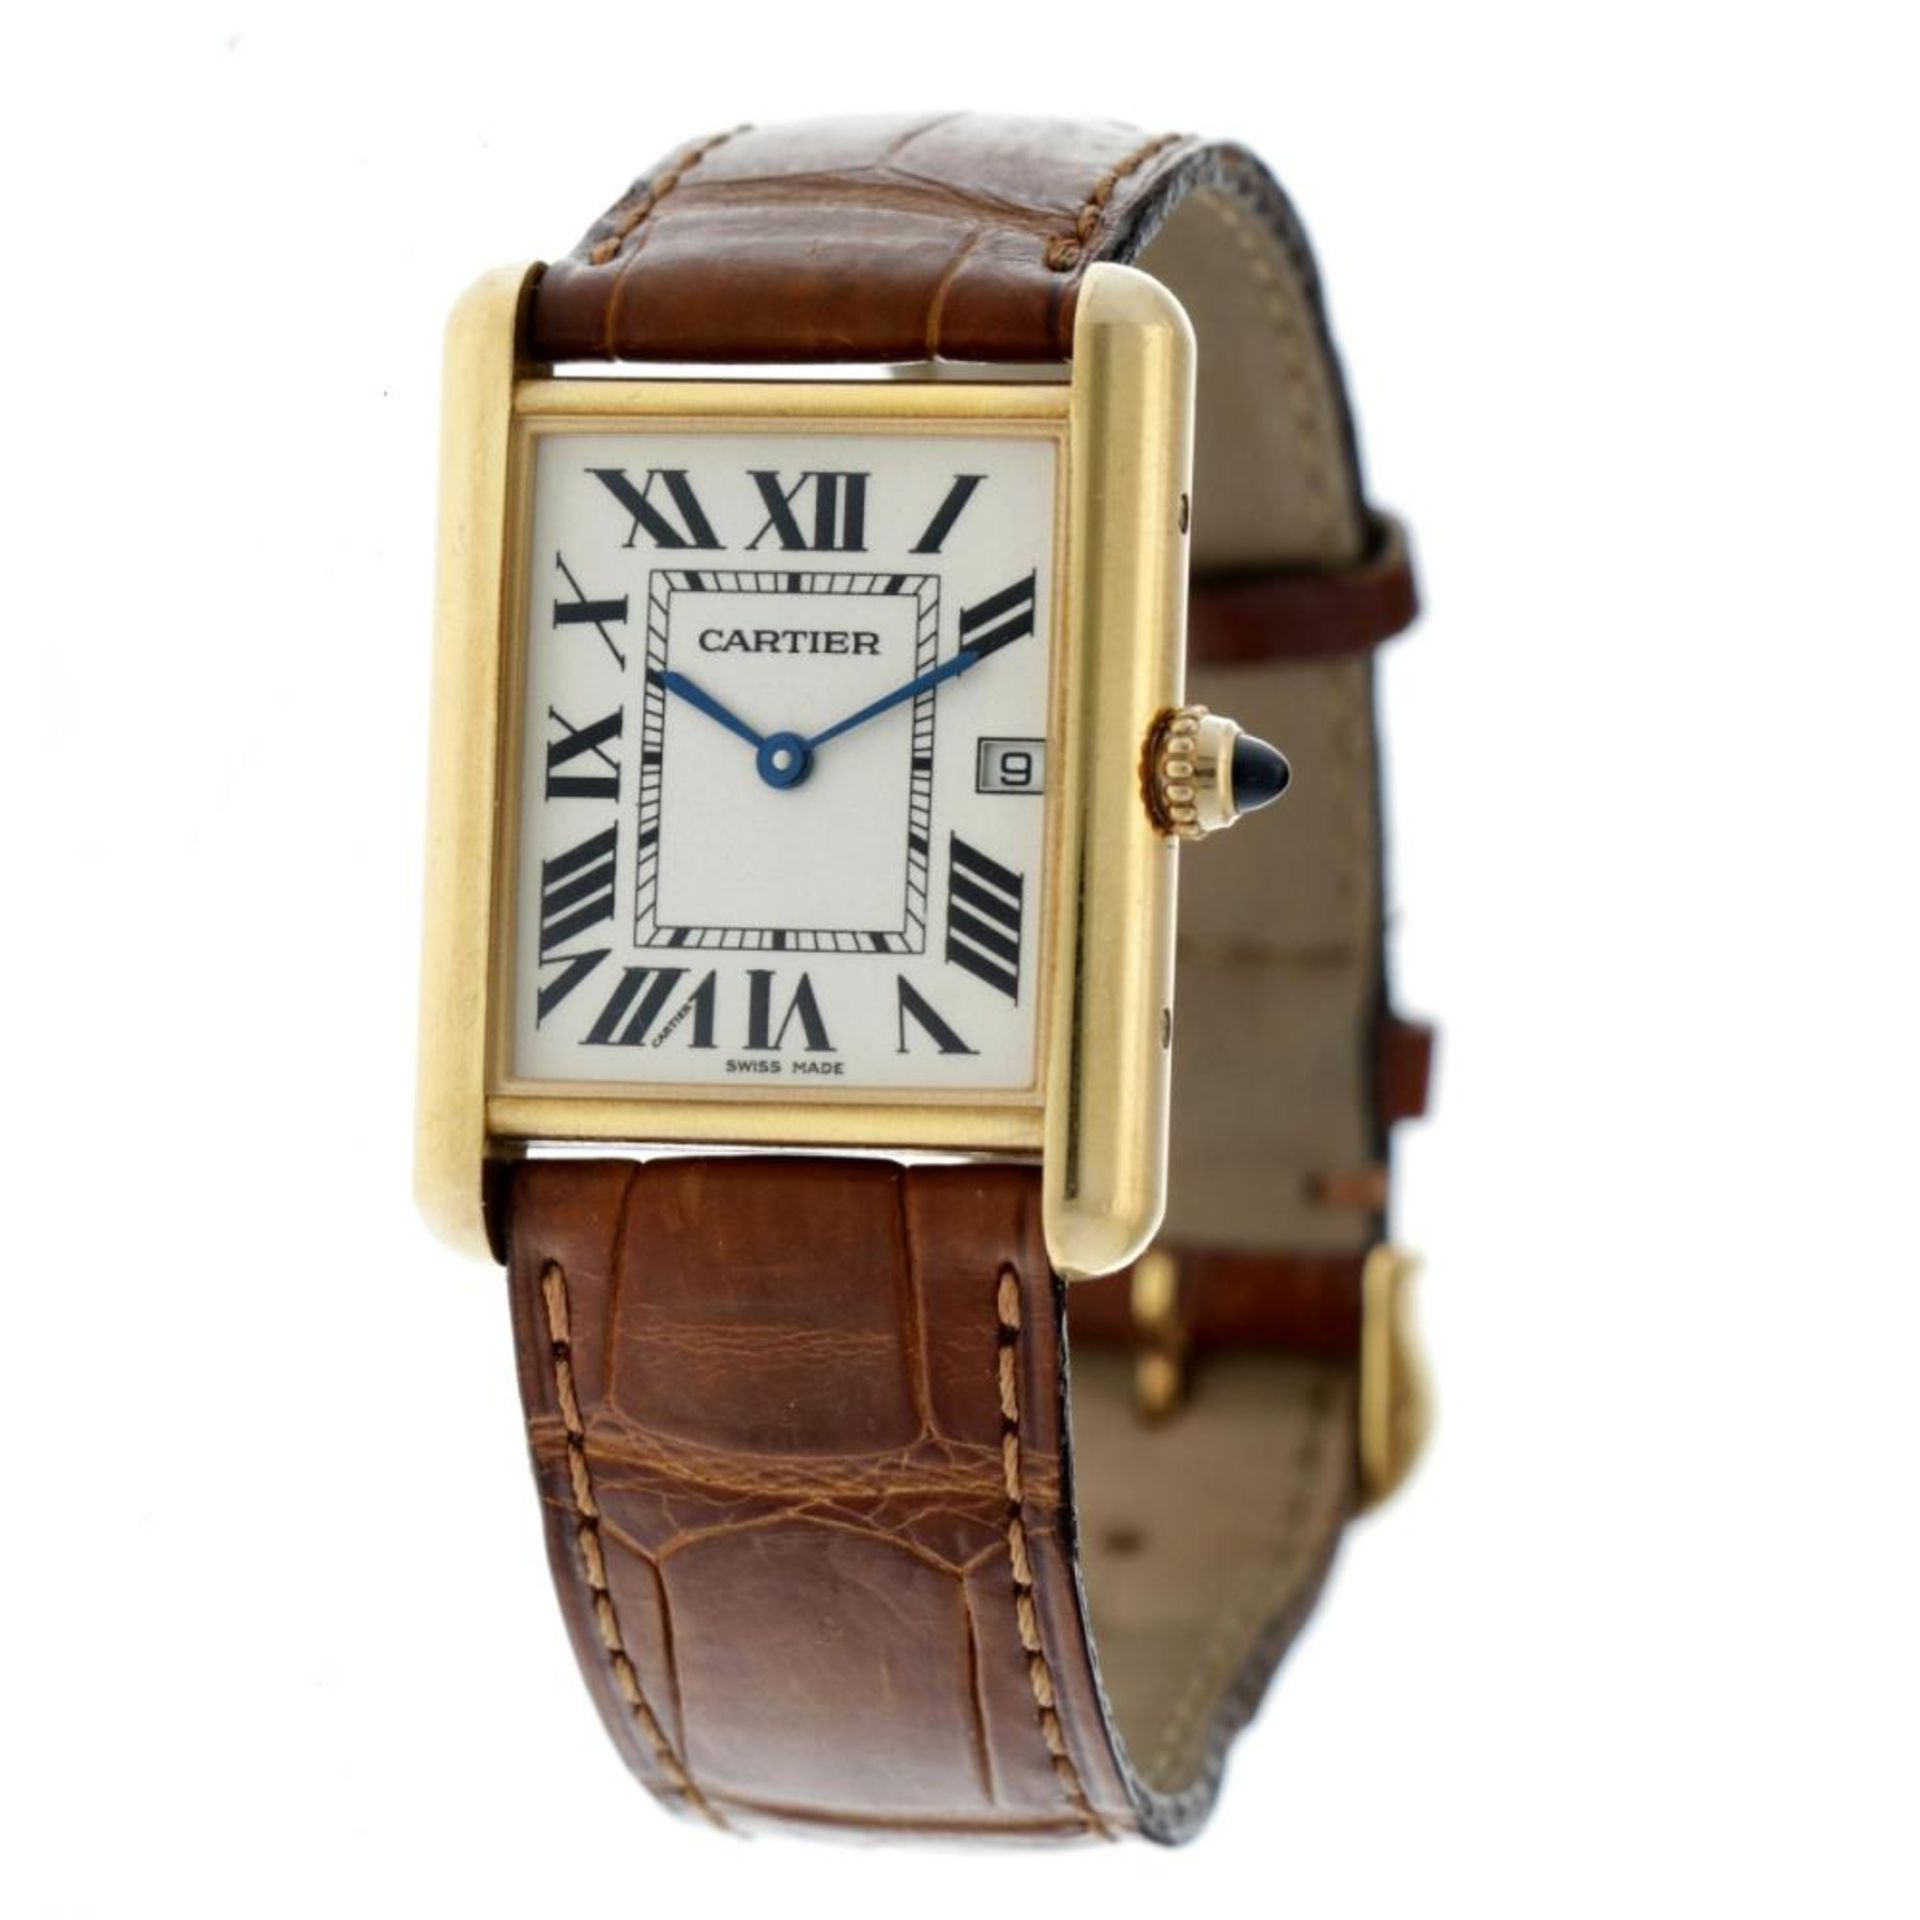 Cartier Tank Louis 2441 - 18 carat gold - Men's watch - approx. 2005. - Image 3 of 10